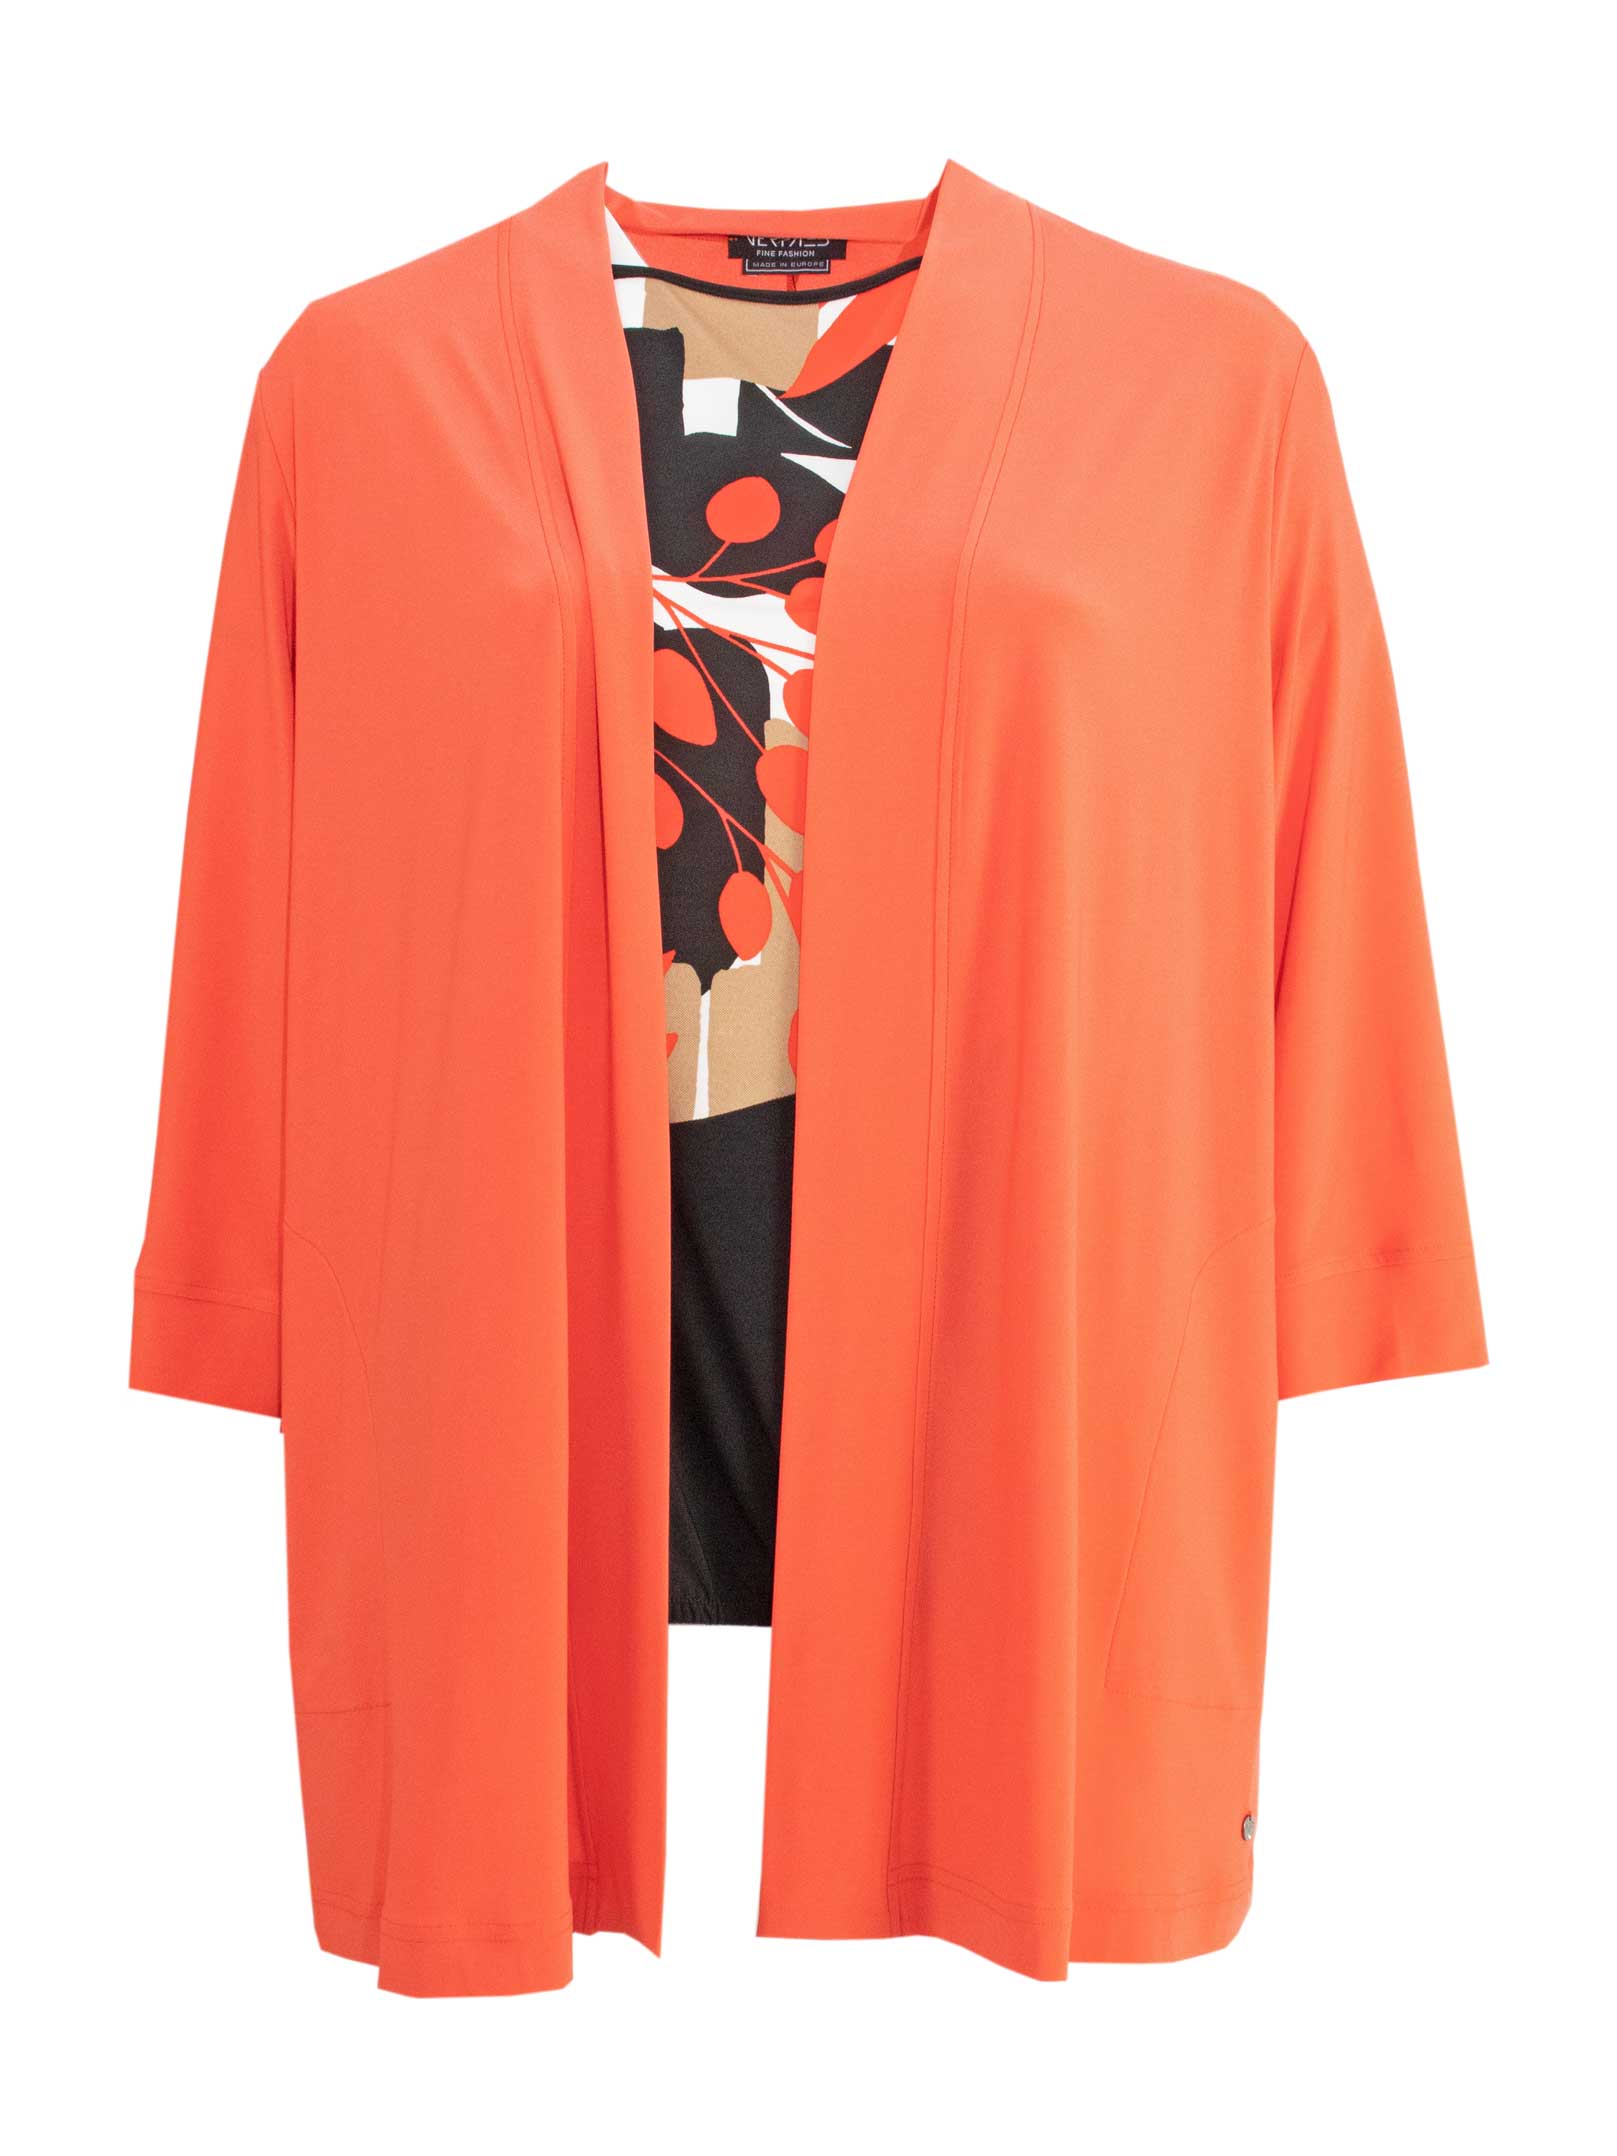 Verpass Jacke-Shirt-Set orange